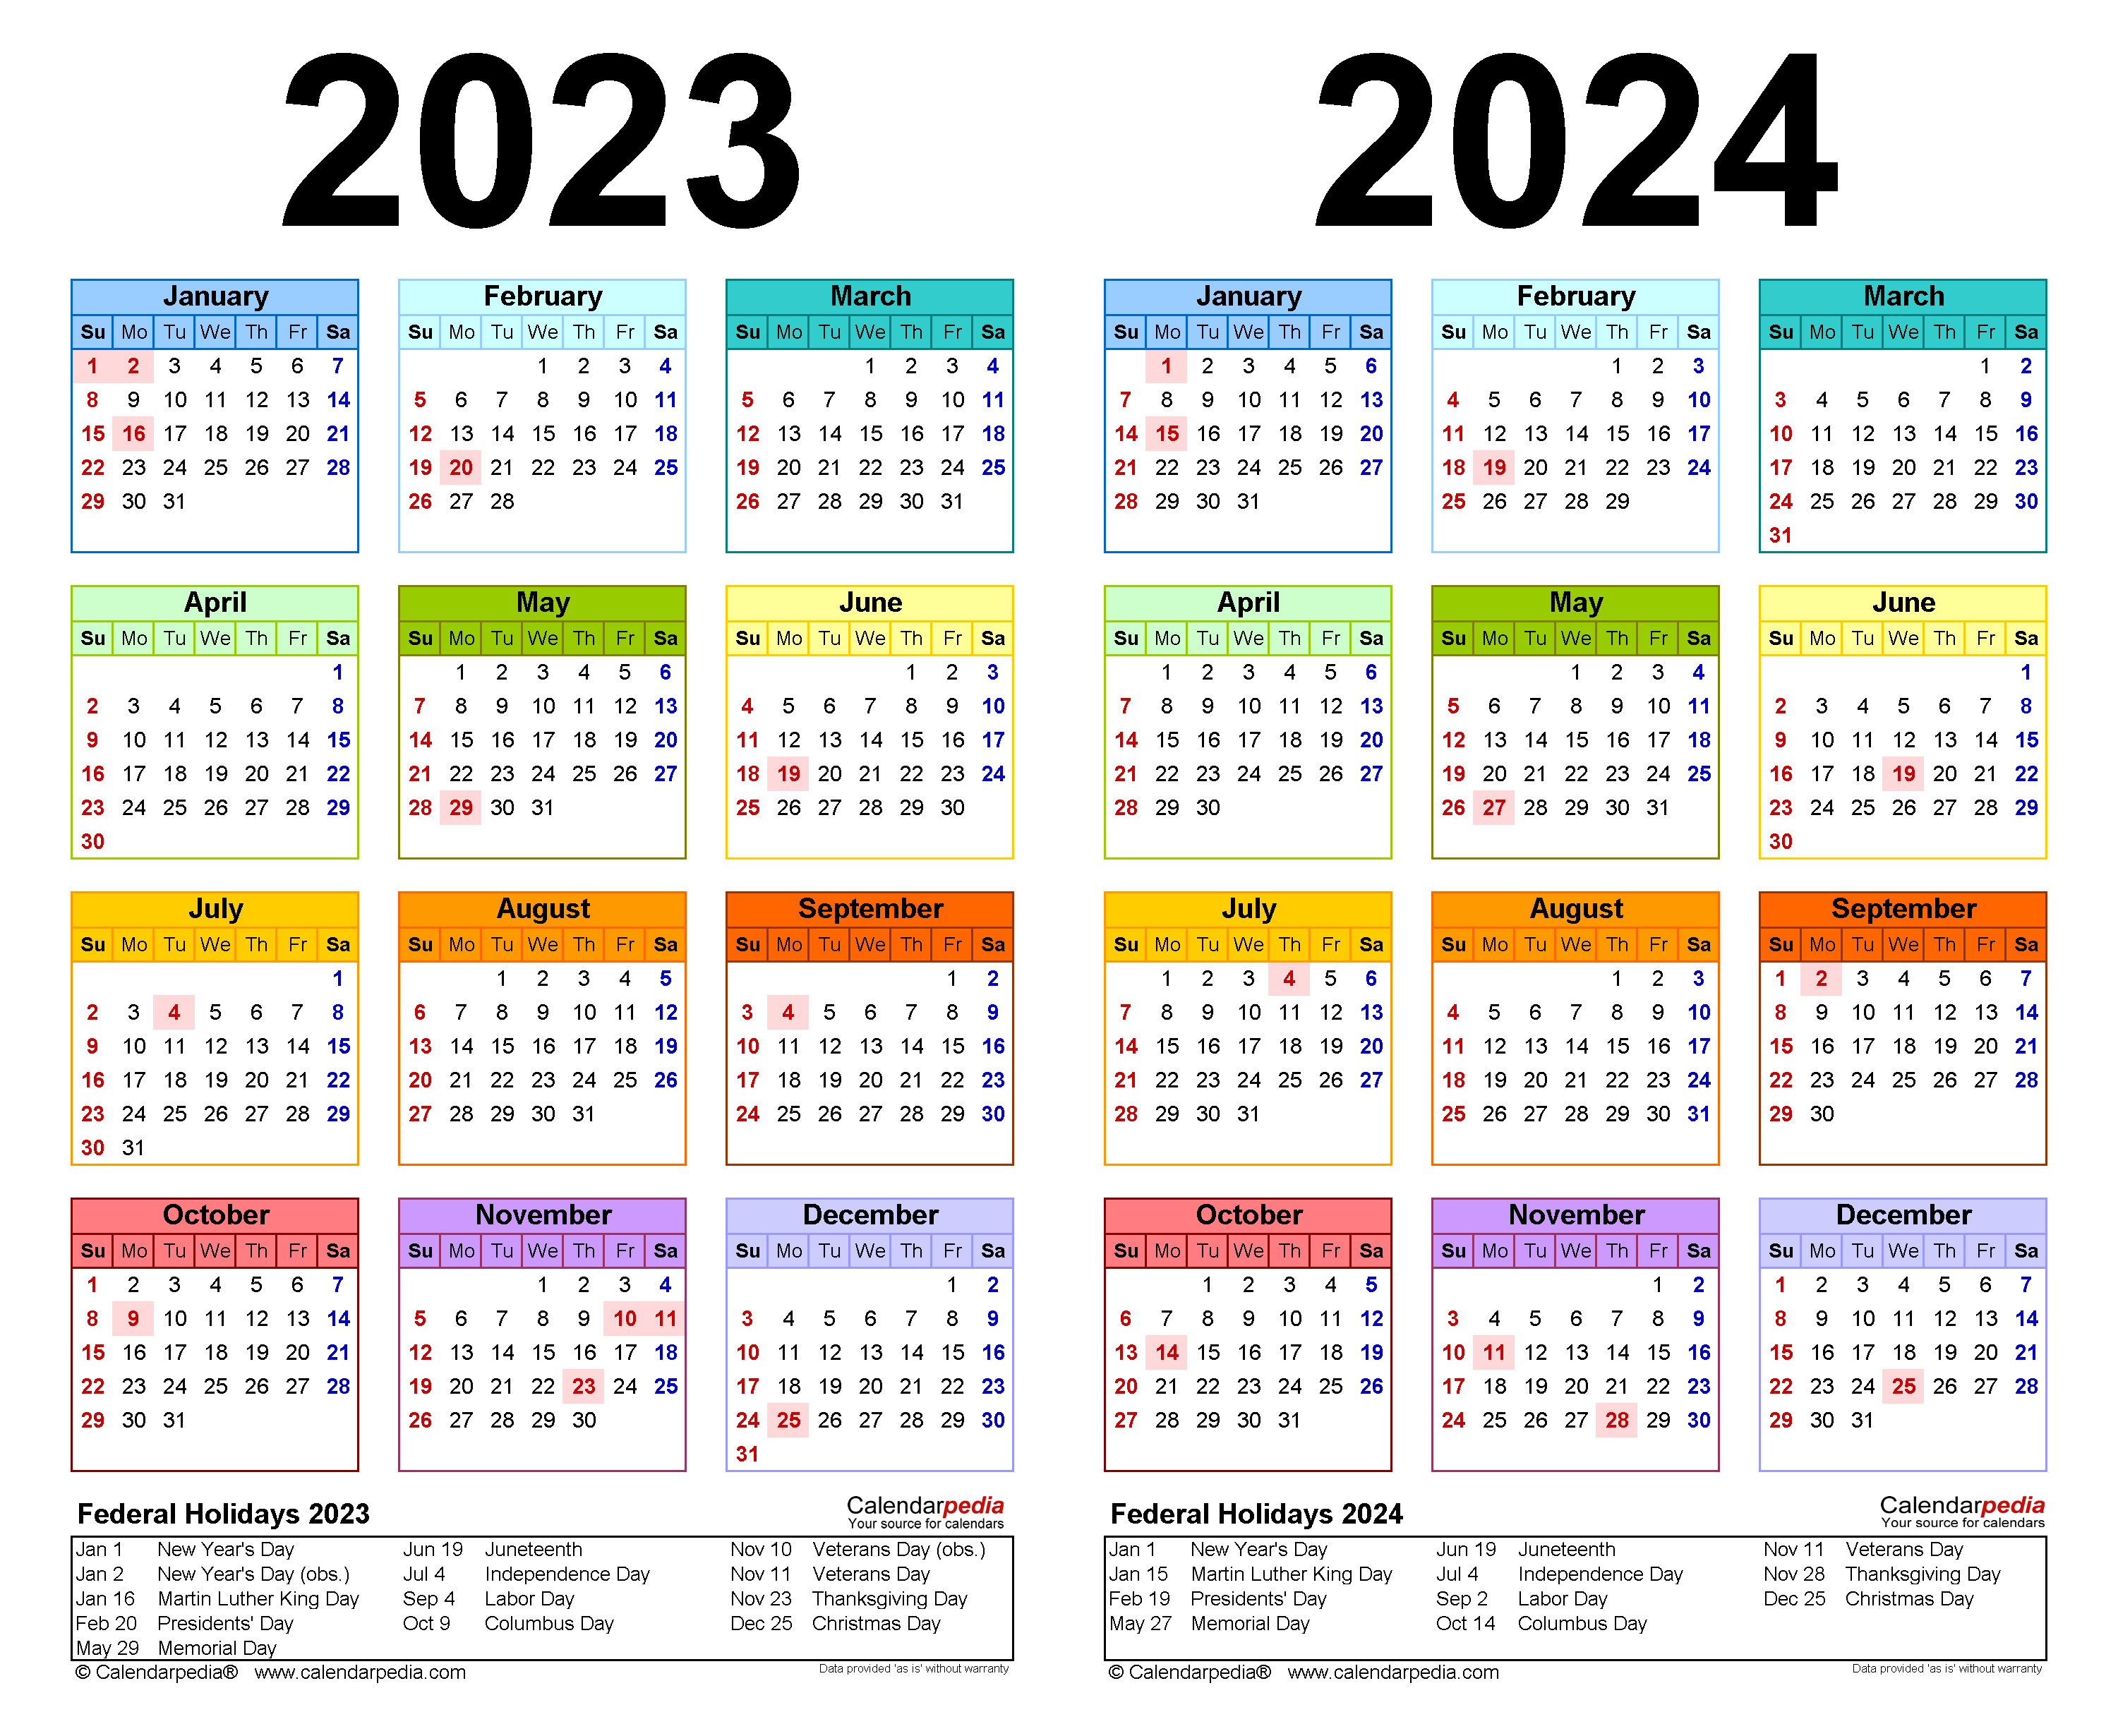 Review Of Ucsc 2023 2024 Calendar Ideas Calendar Ideas 2023